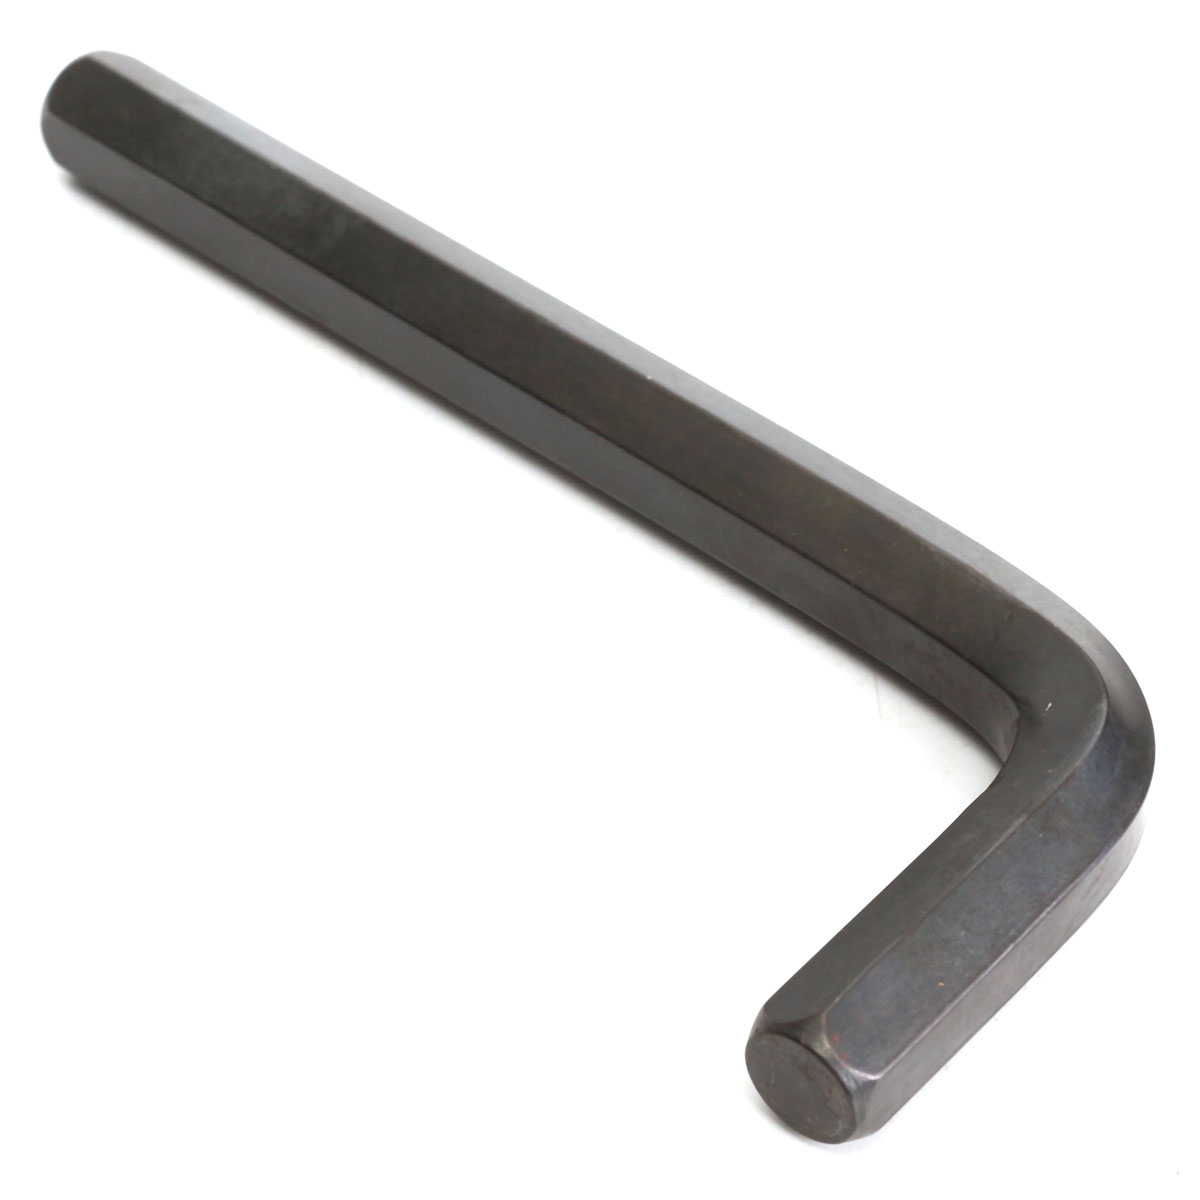 12mm-Steel-L-Shaped-Metric-Hexagon-Key-Hex-Allen-Wrench-Spanner-Stick-Tool-Black-1047502